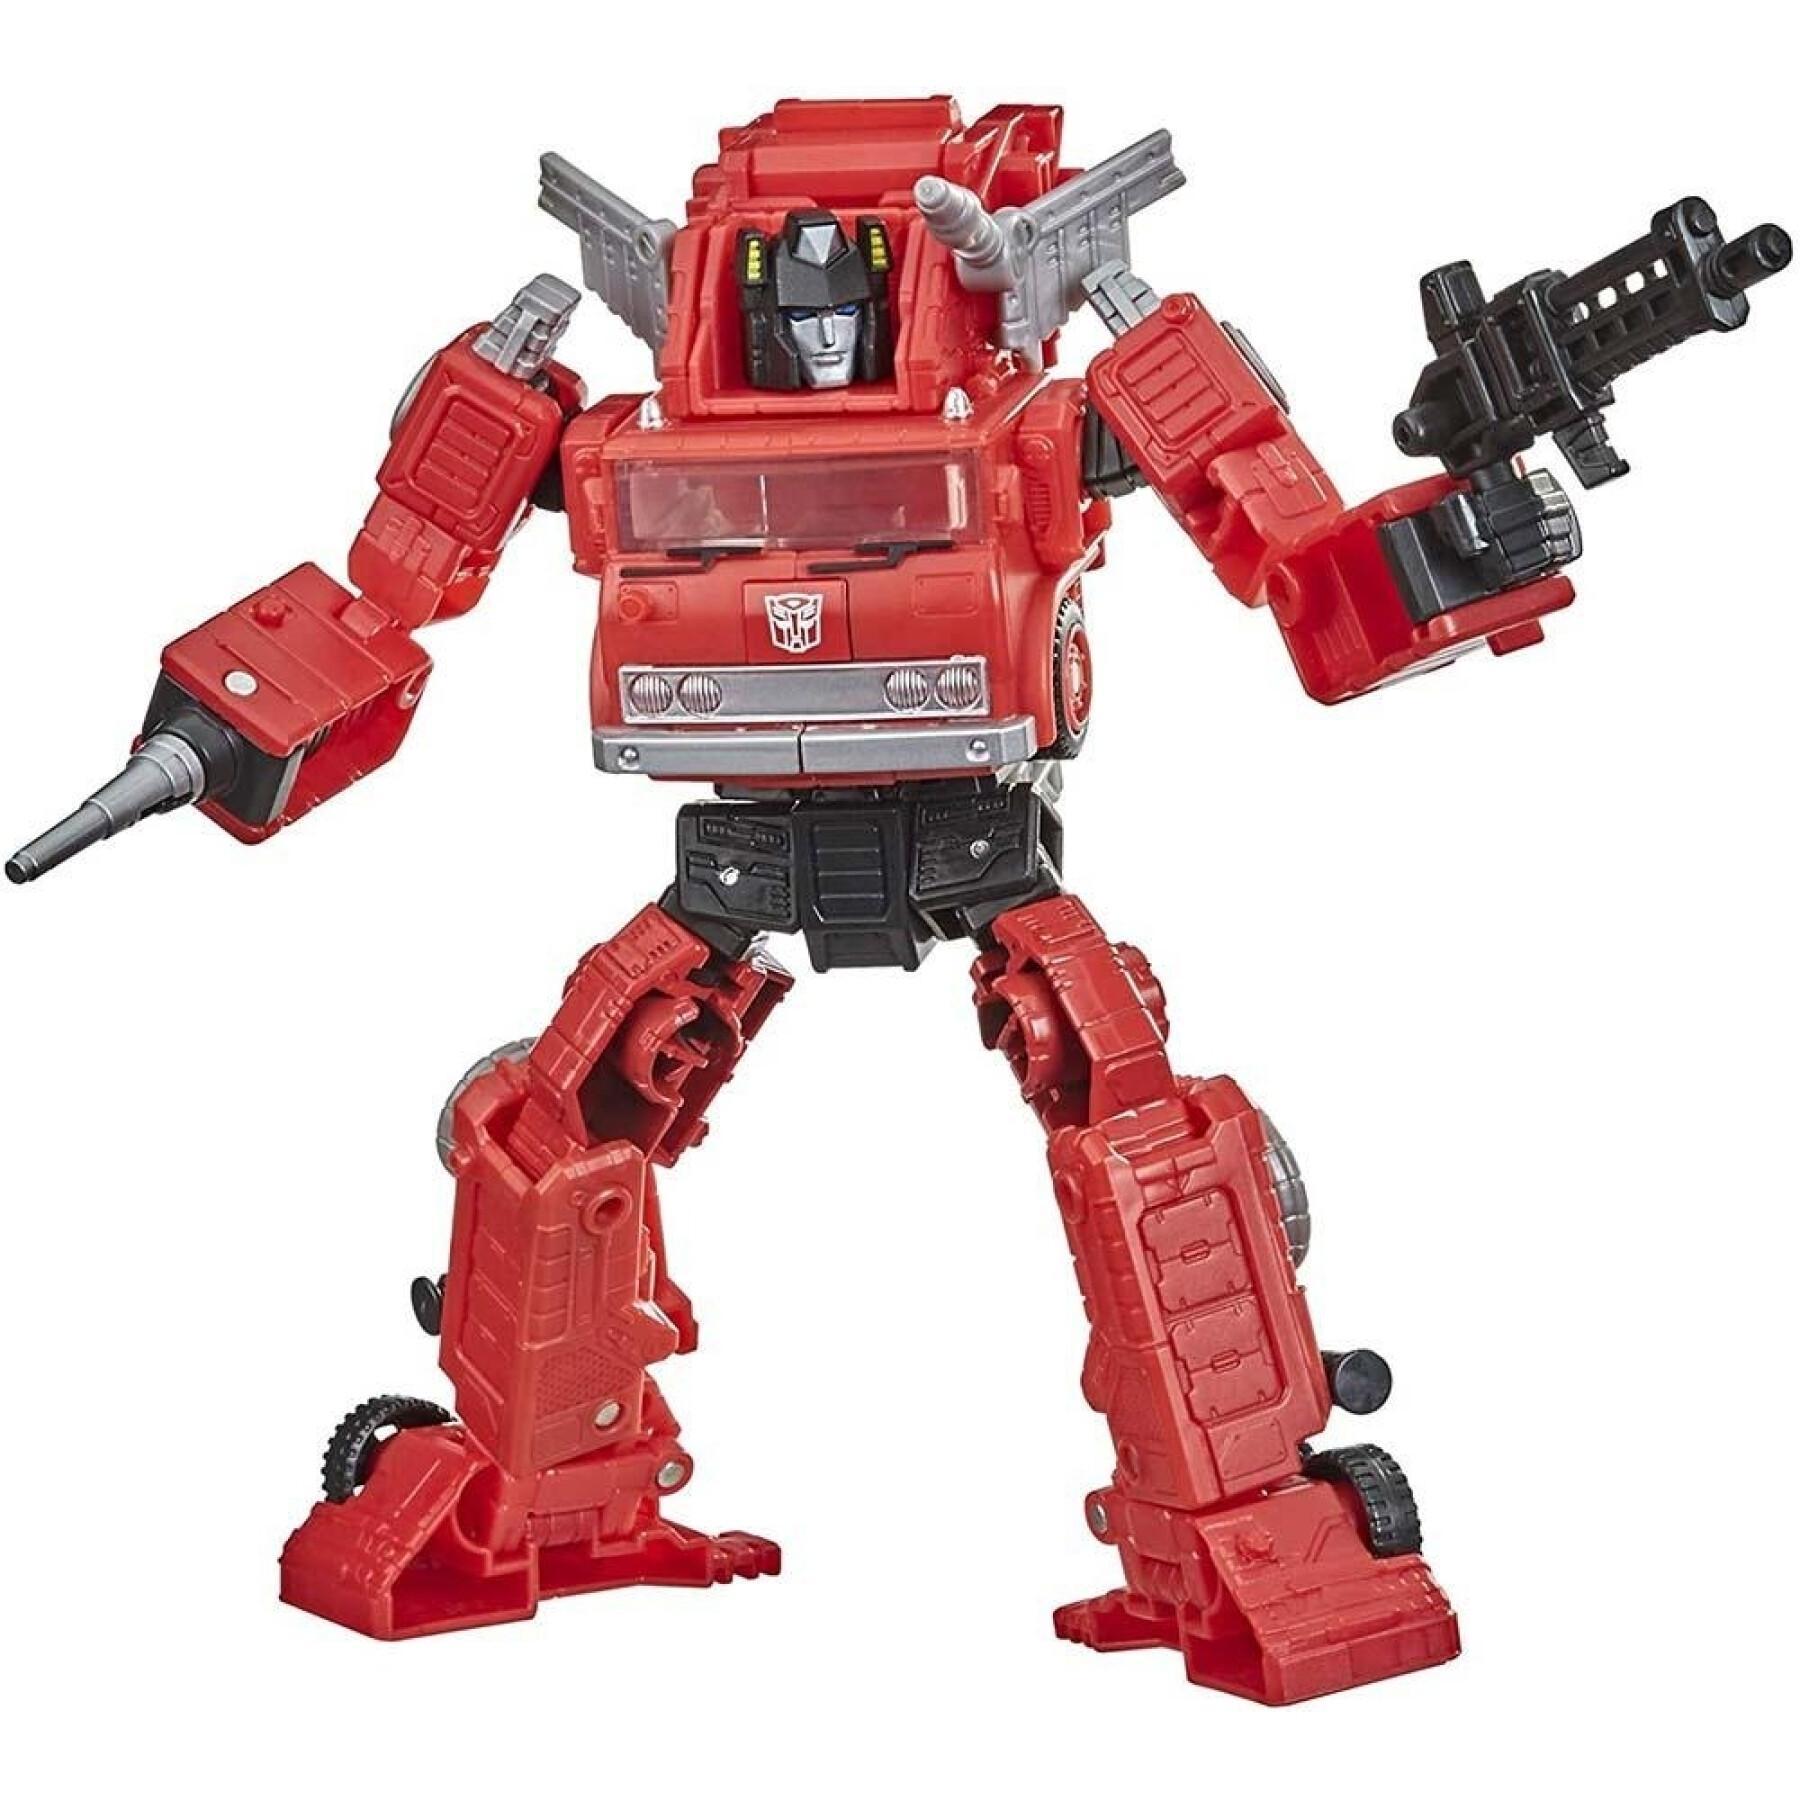 Figurita Hasbro Transformers Generation WFC Voyager